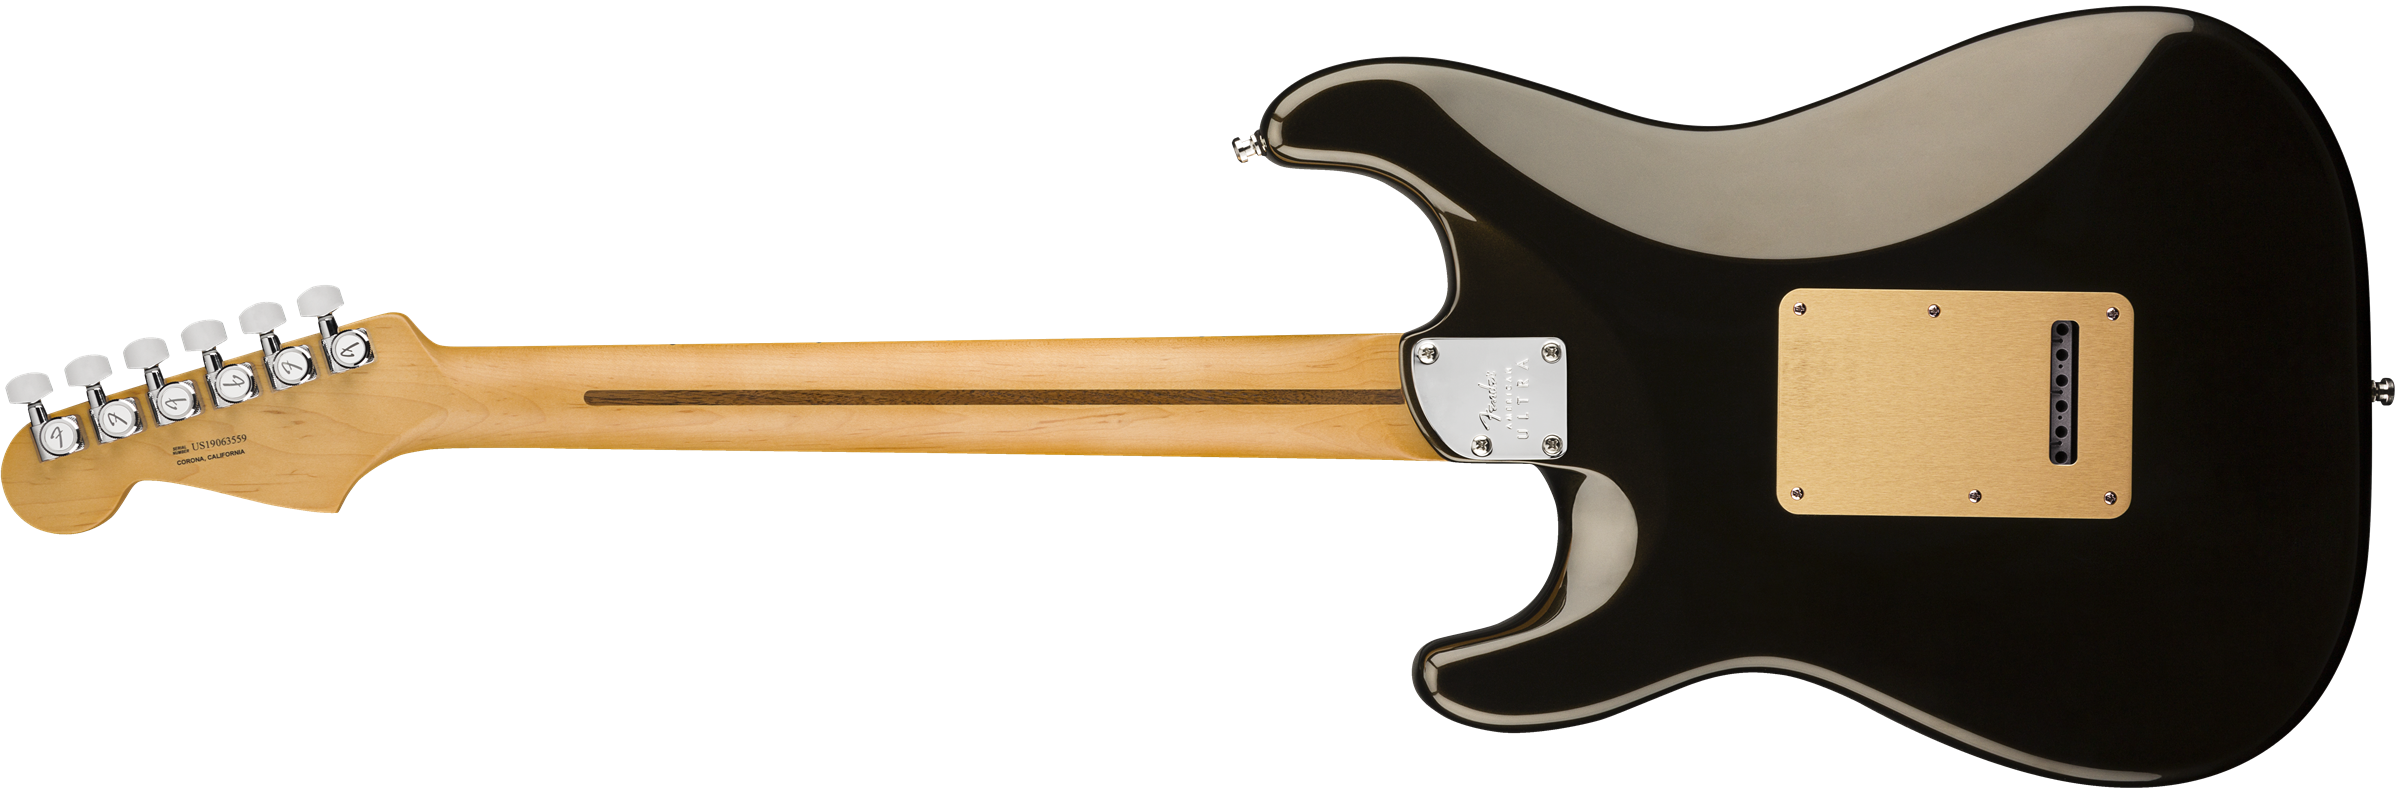 Fender Strat American Ultra Hss 2019 Usa Mn - Texas Tea - Guitare Électrique Forme Str - Variation 2